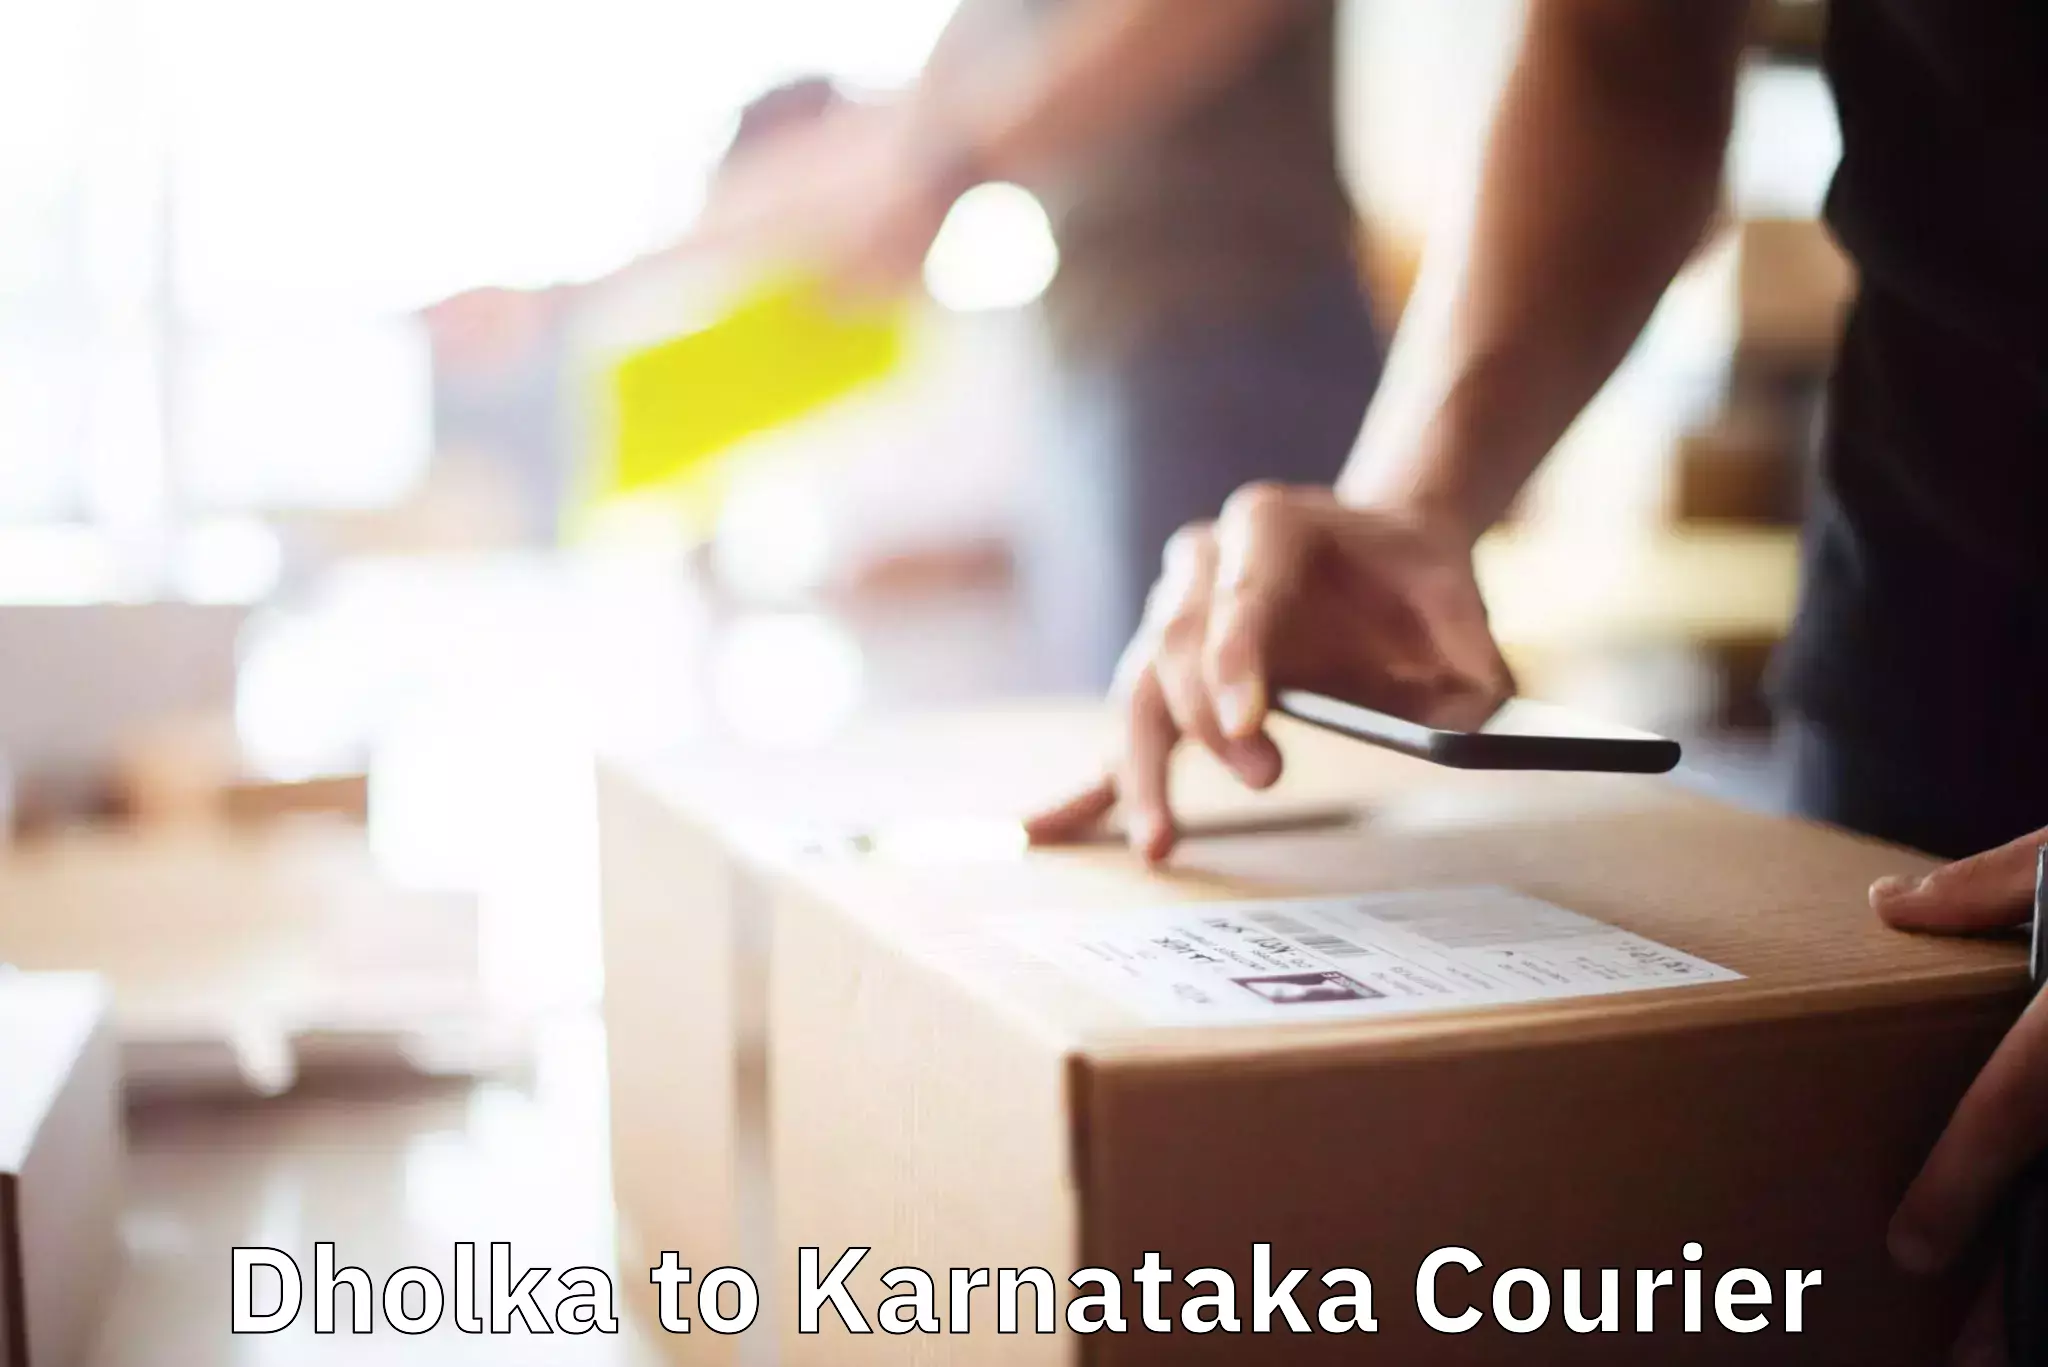 Hassle-free relocation Dholka to Karnataka